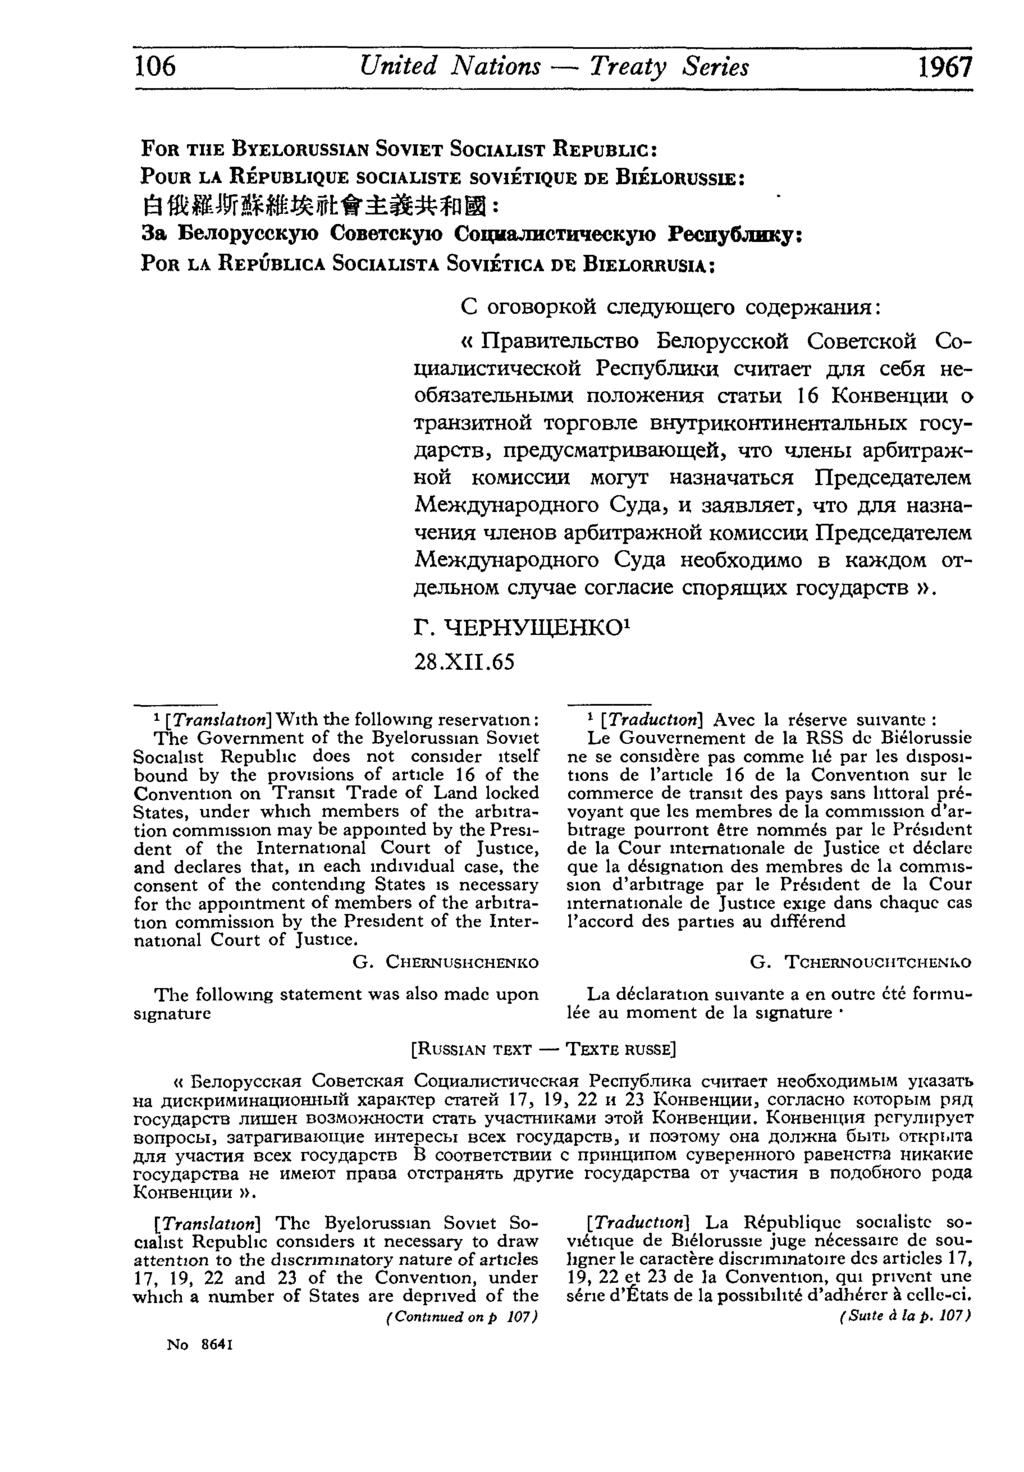 106 United Nations Treaty Series 1967 FOR THE BYELORUSSIAN SOVIET SOCIALIST REPUBLIC: POUR LA RÉPUBLIQUE SOCIALISTE SOVIÉTIQUE DE BIÉLORUSSIE: EejiopyccKyro ConeTCKyio ComiajiHCTHHecKyio PecnyCjiHKy: